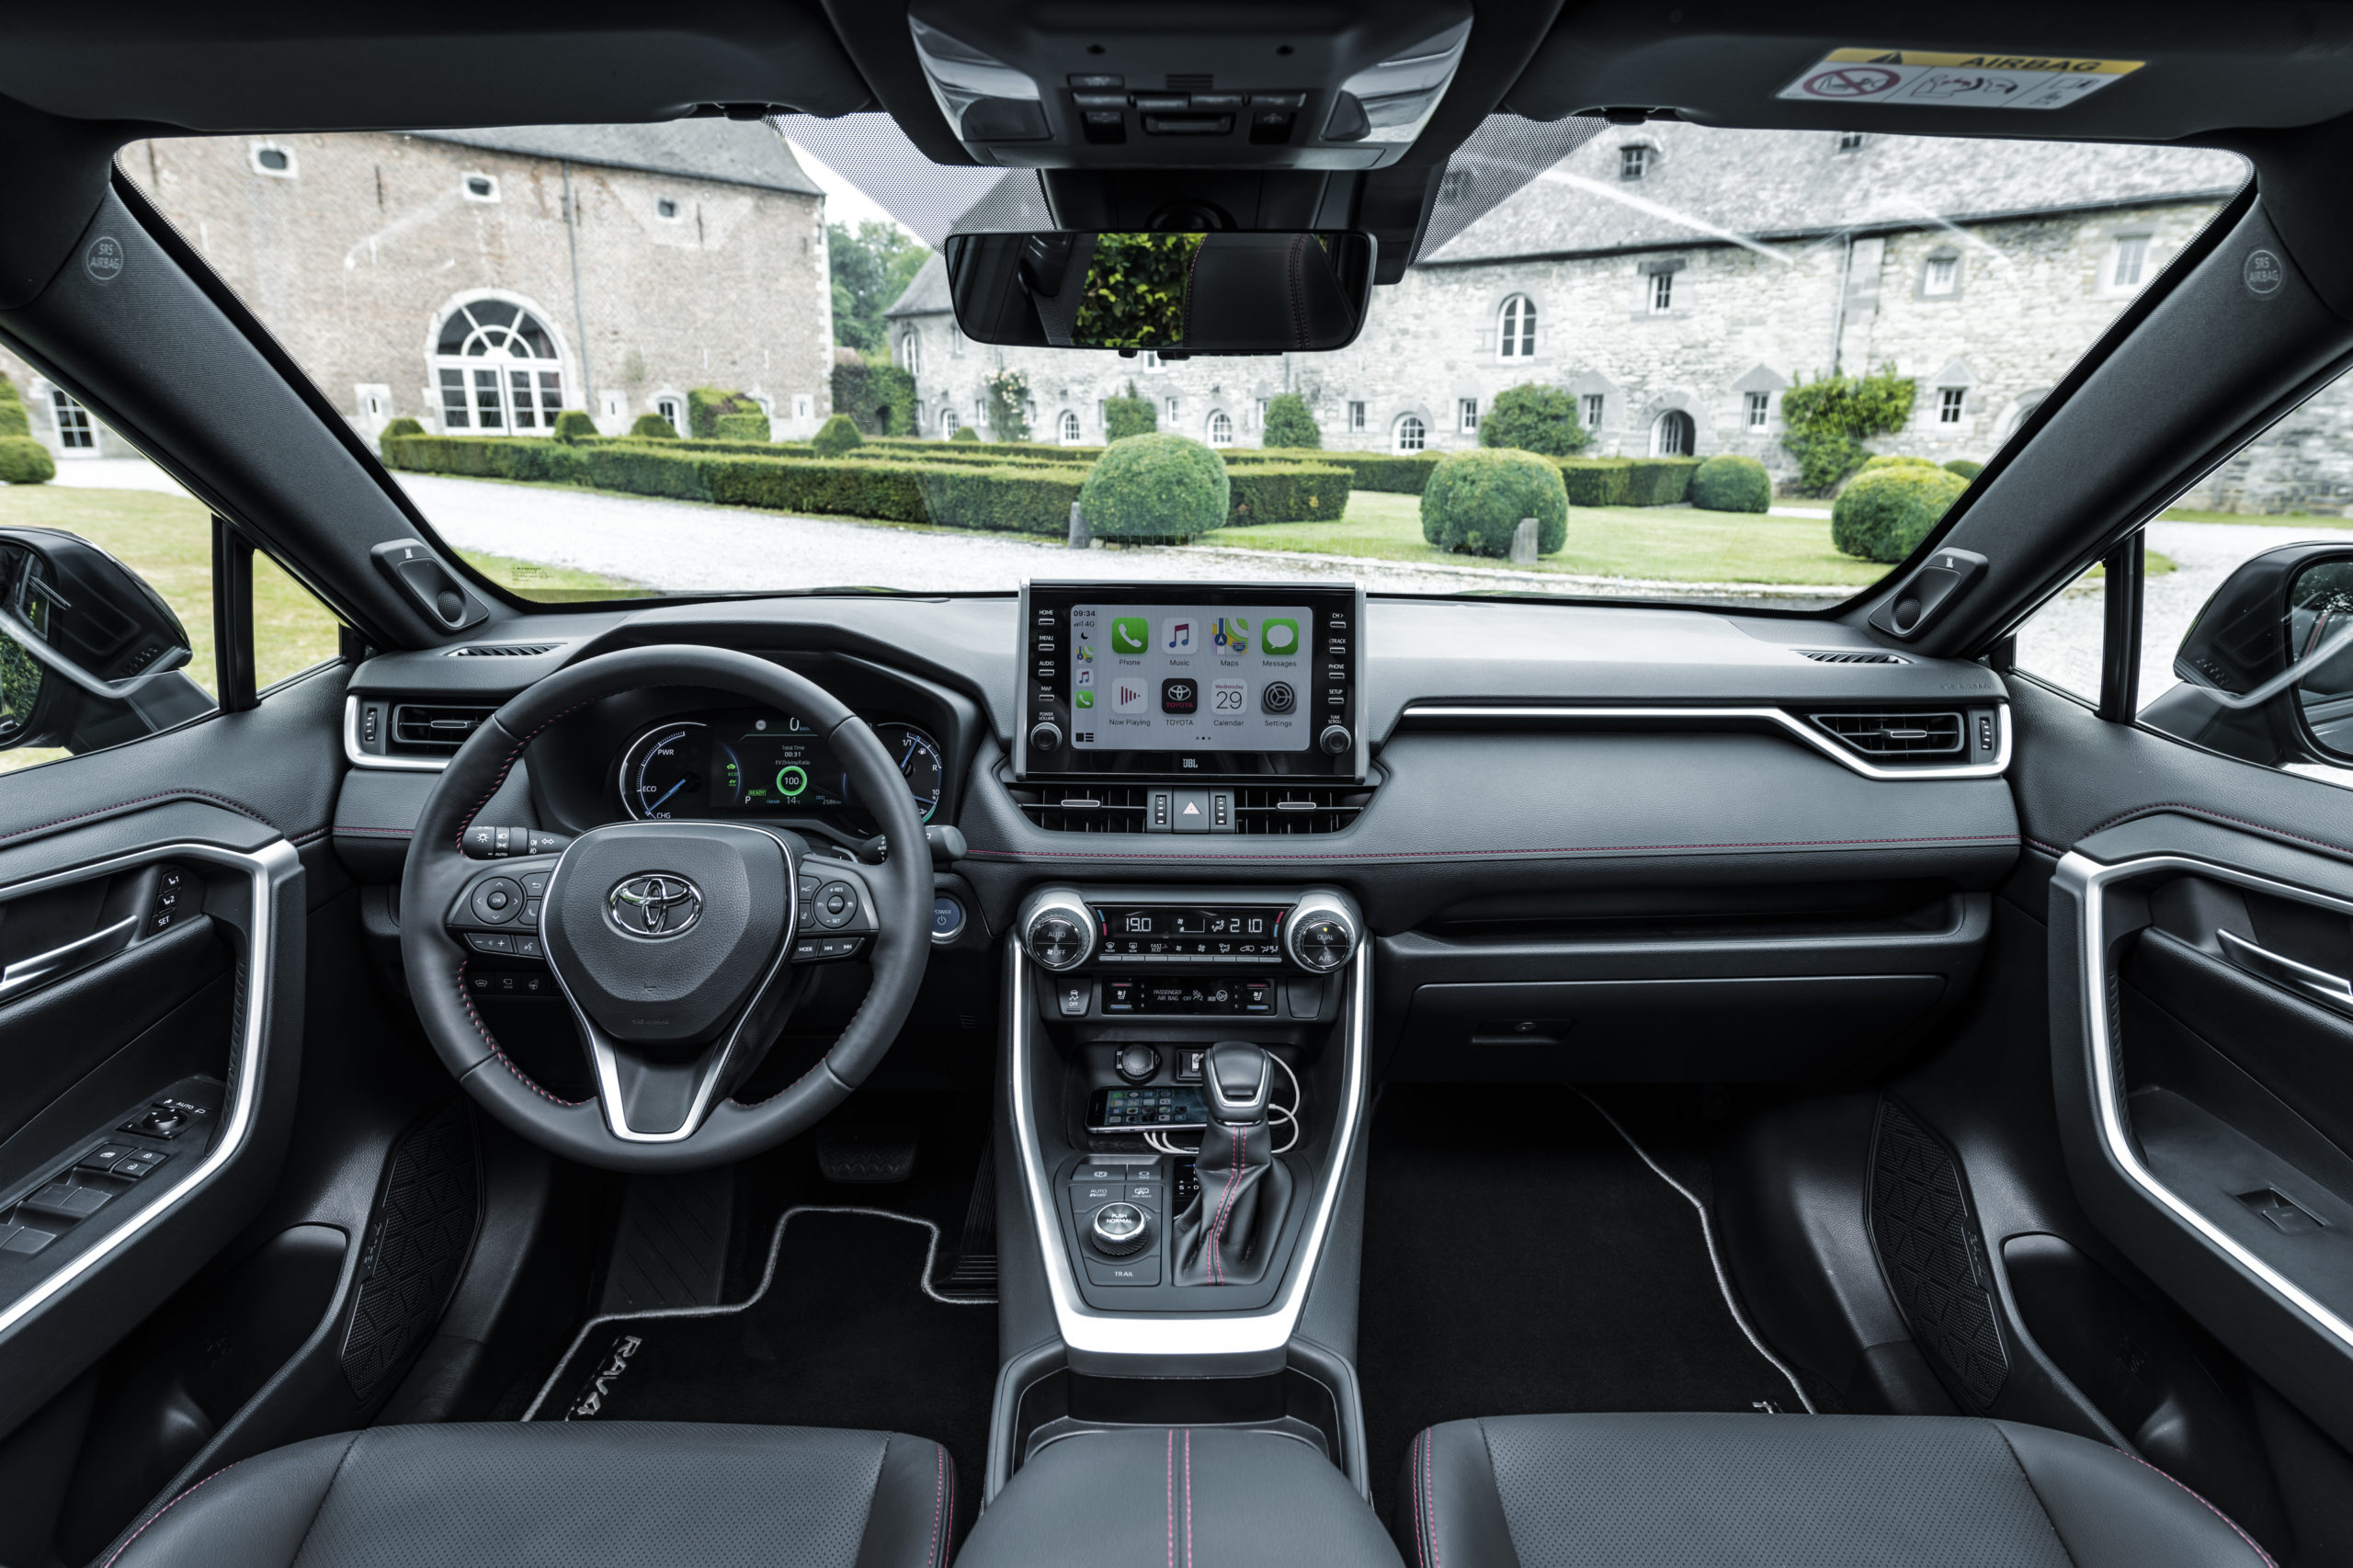 The interior of a Toyota RAV4